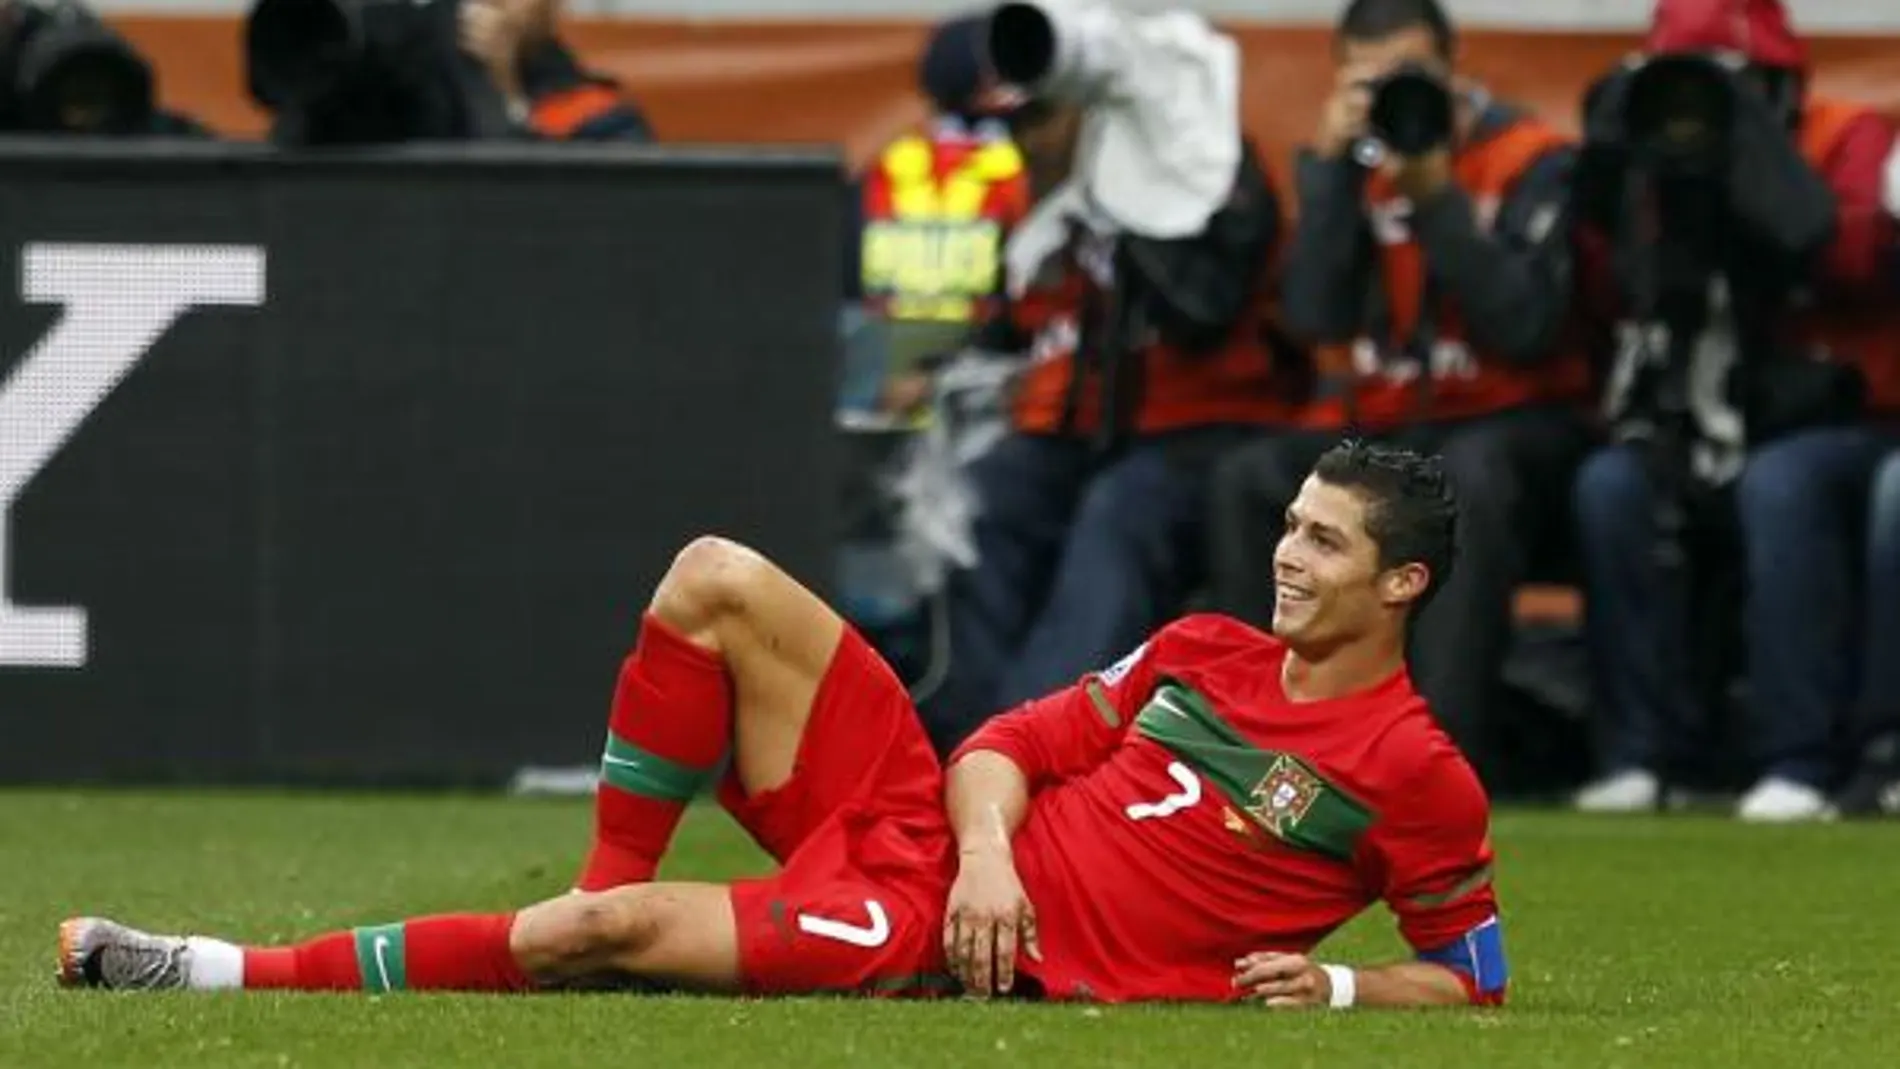 16 meses sin marcar con Portugal